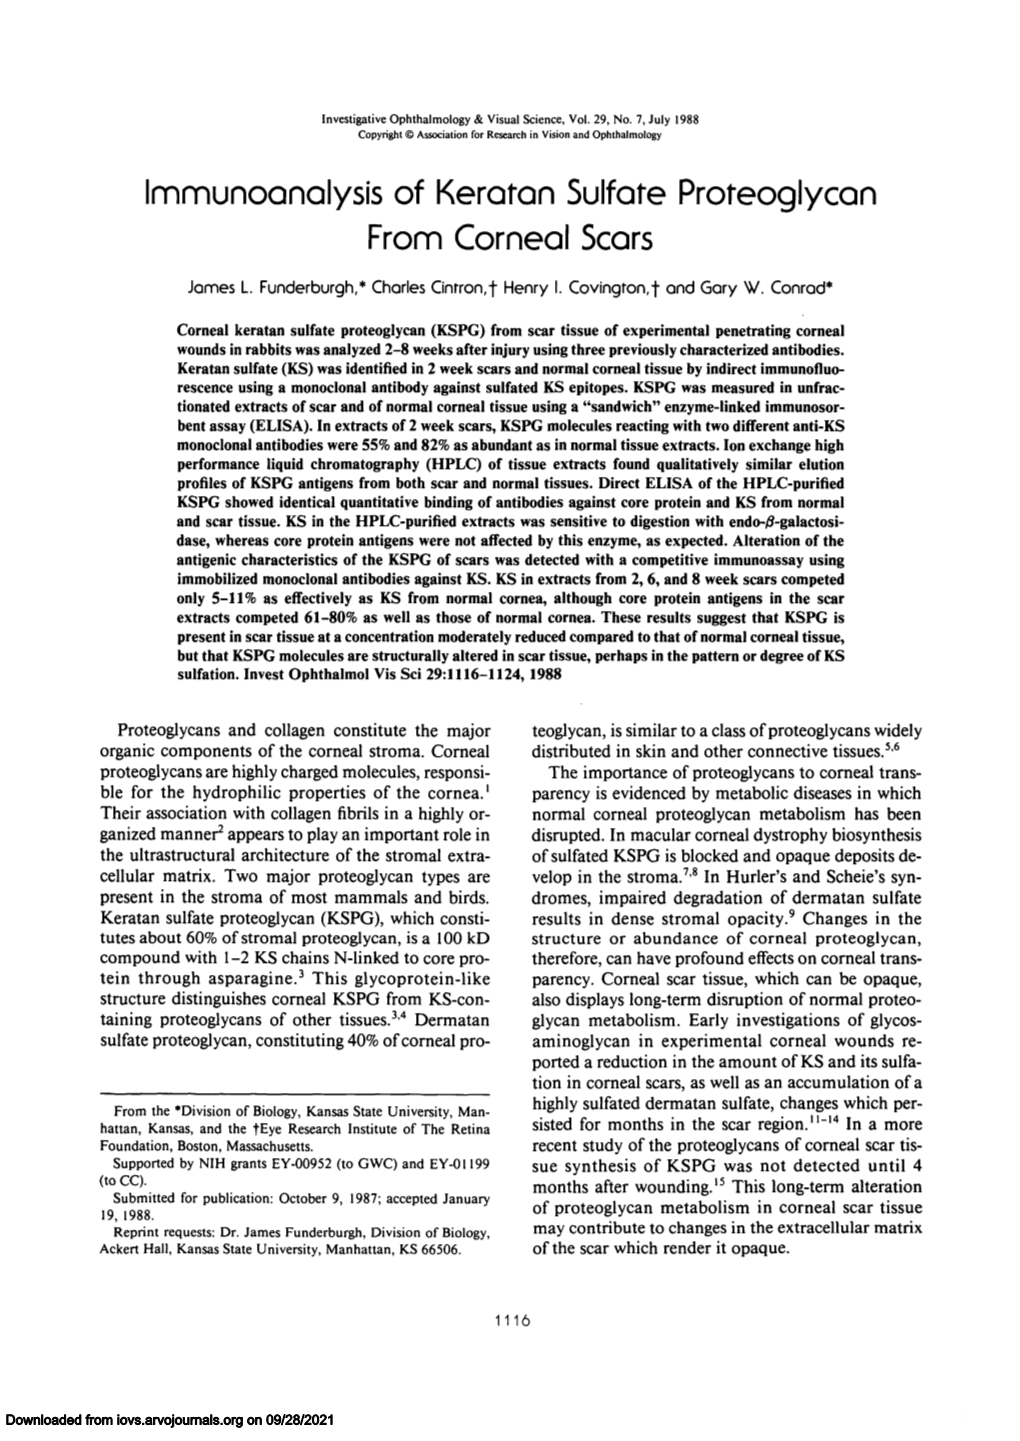 Immunoanalysis of Keratan Sulfate Proteoglycan from Corneal Scars